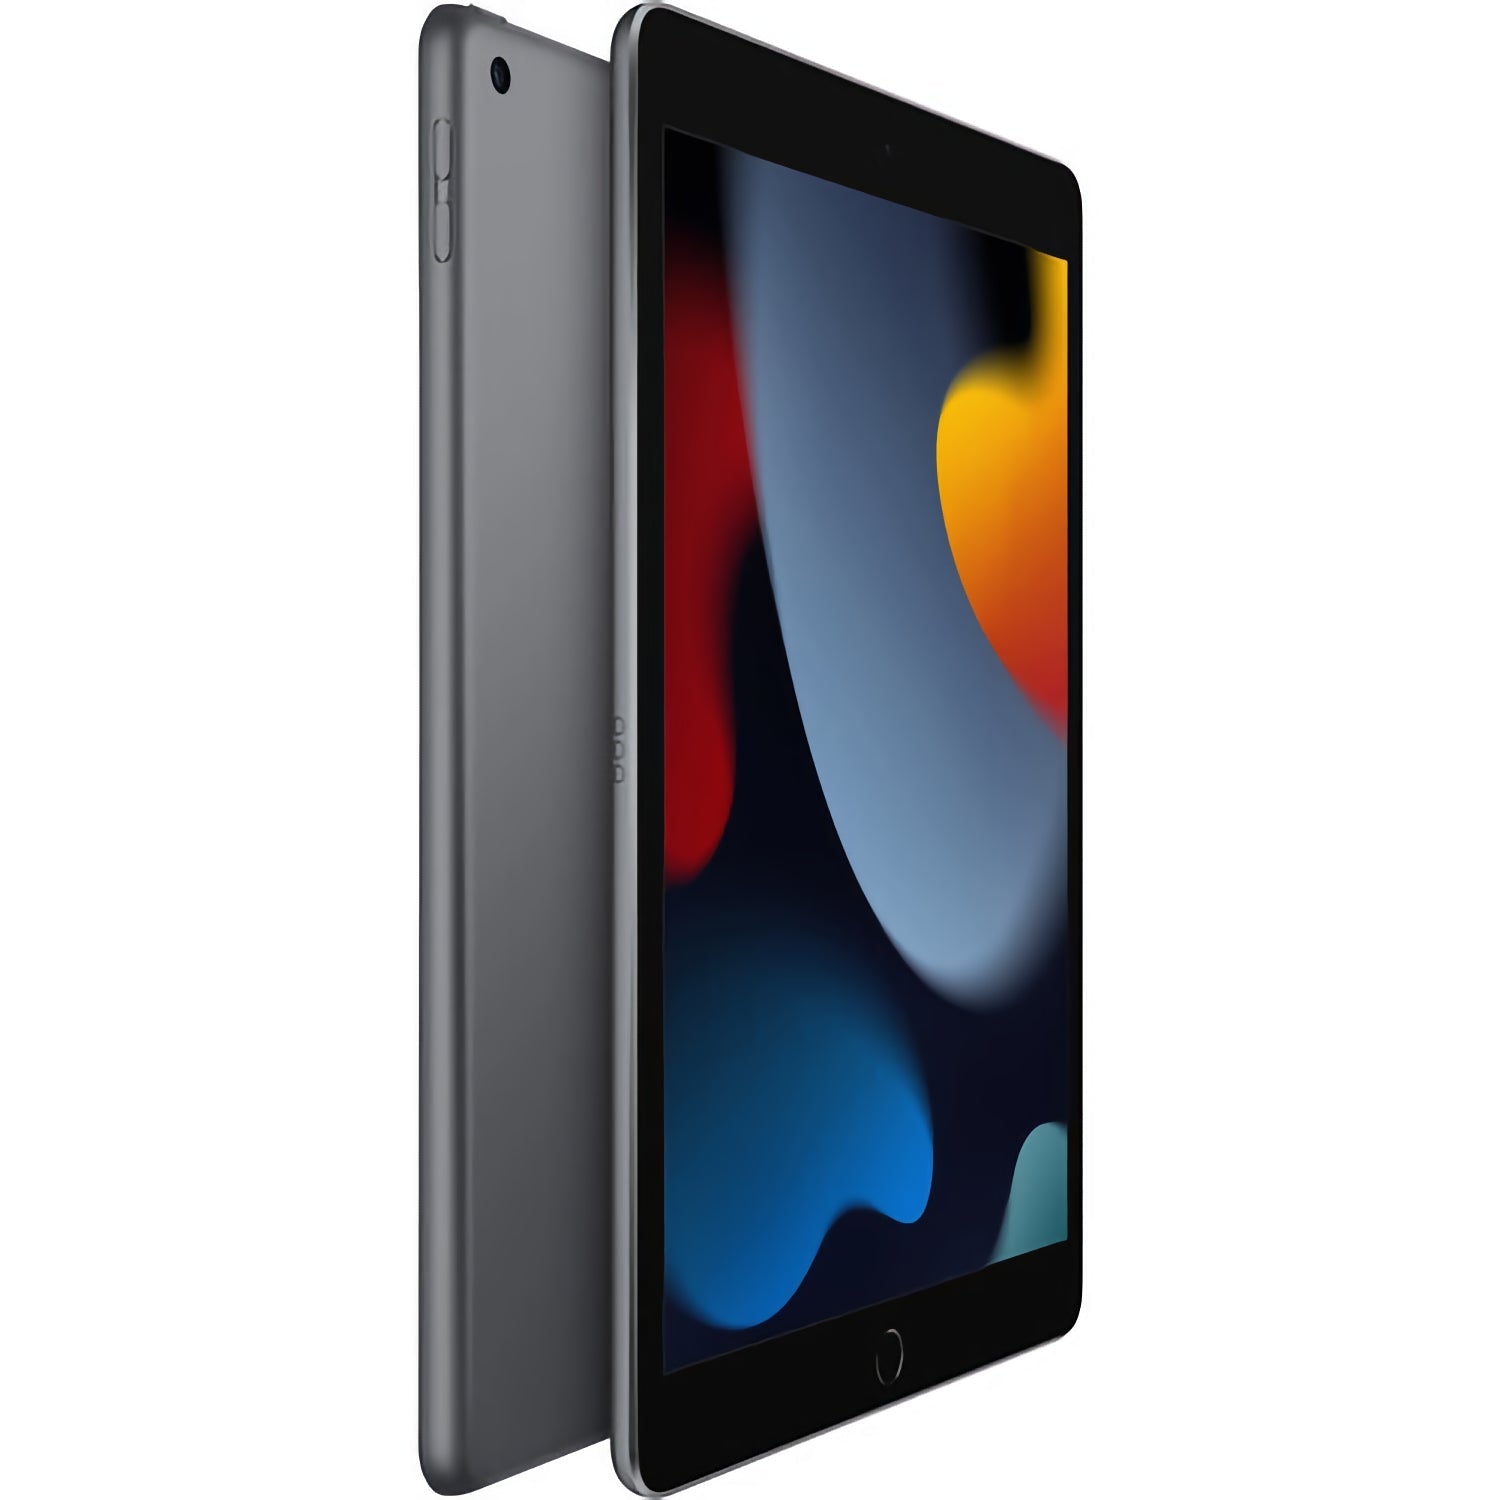 Apple iPad (10.2-inch) – Space Gray (Latest Model)